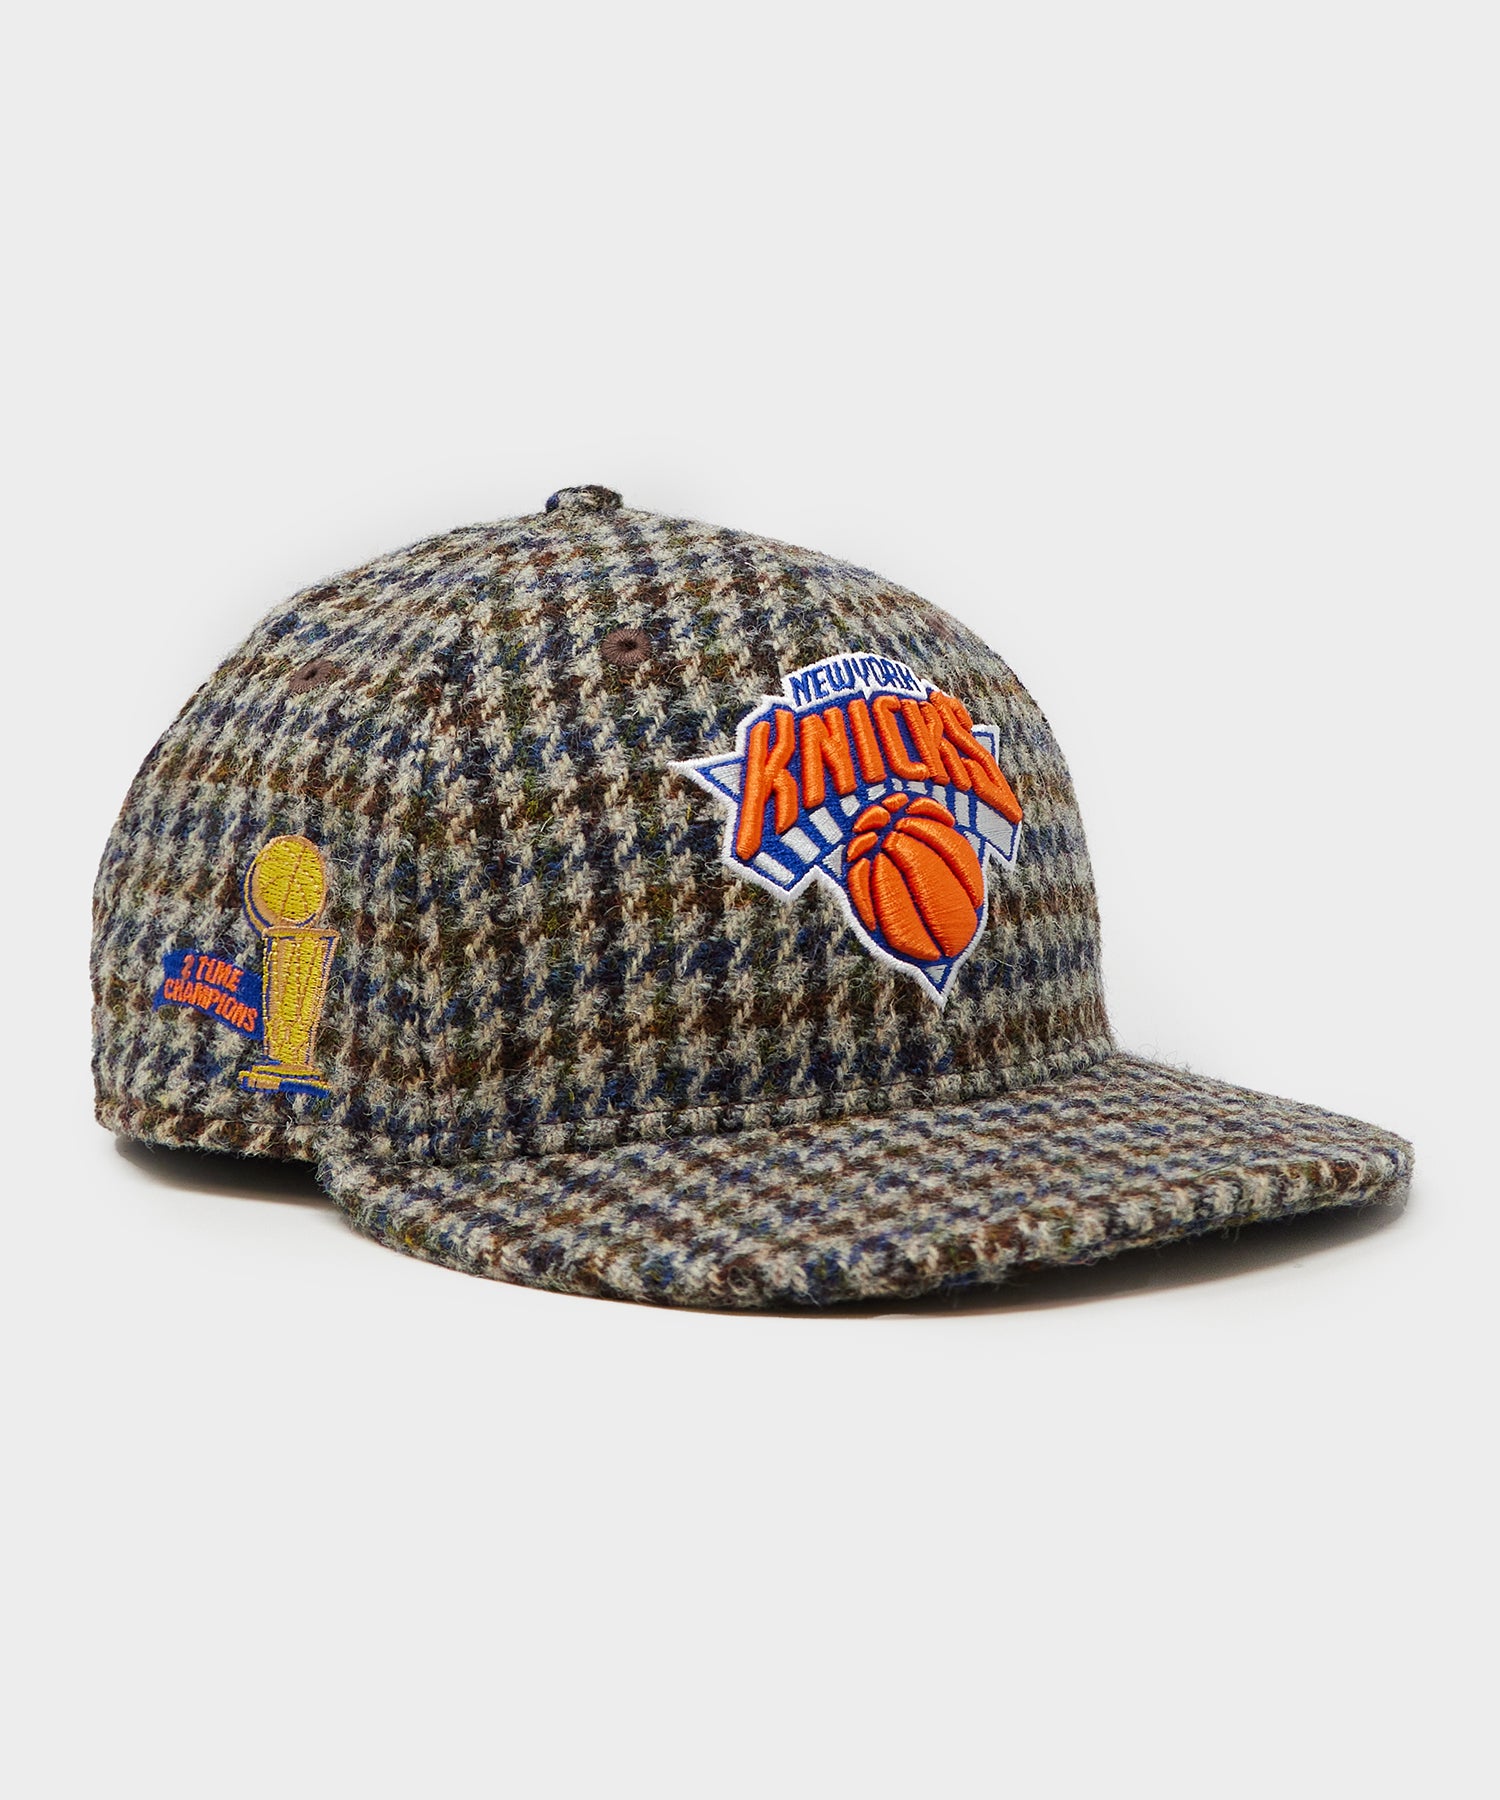 Knicks Apparel & Gear: Jerseys, Hats & More